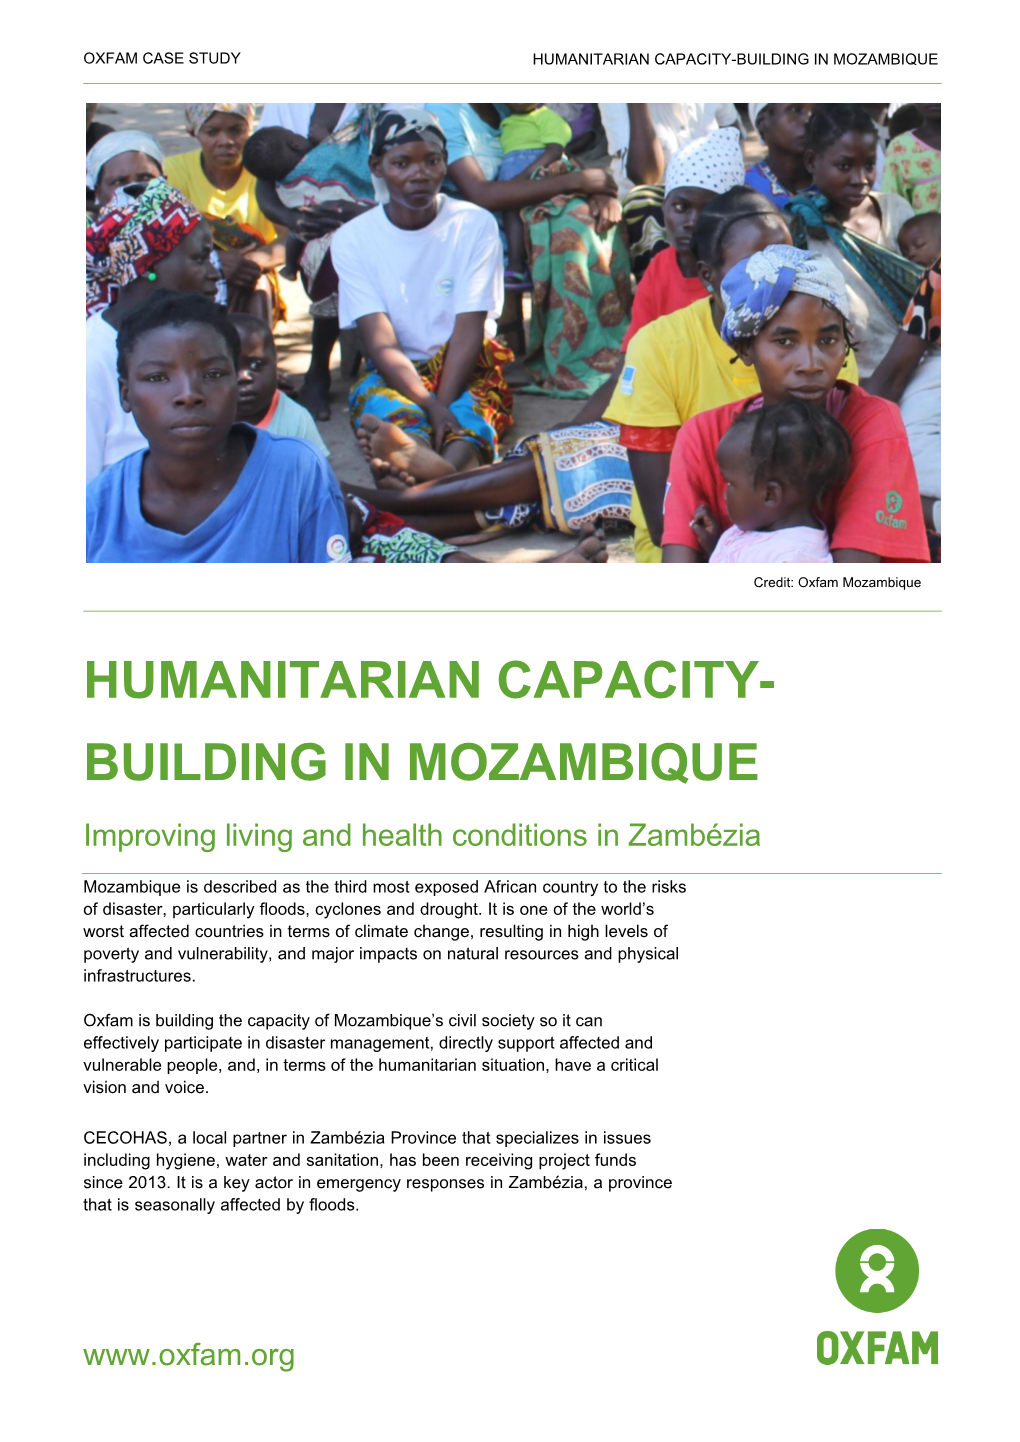 Humanitarian Capacity-Building in Mozambique